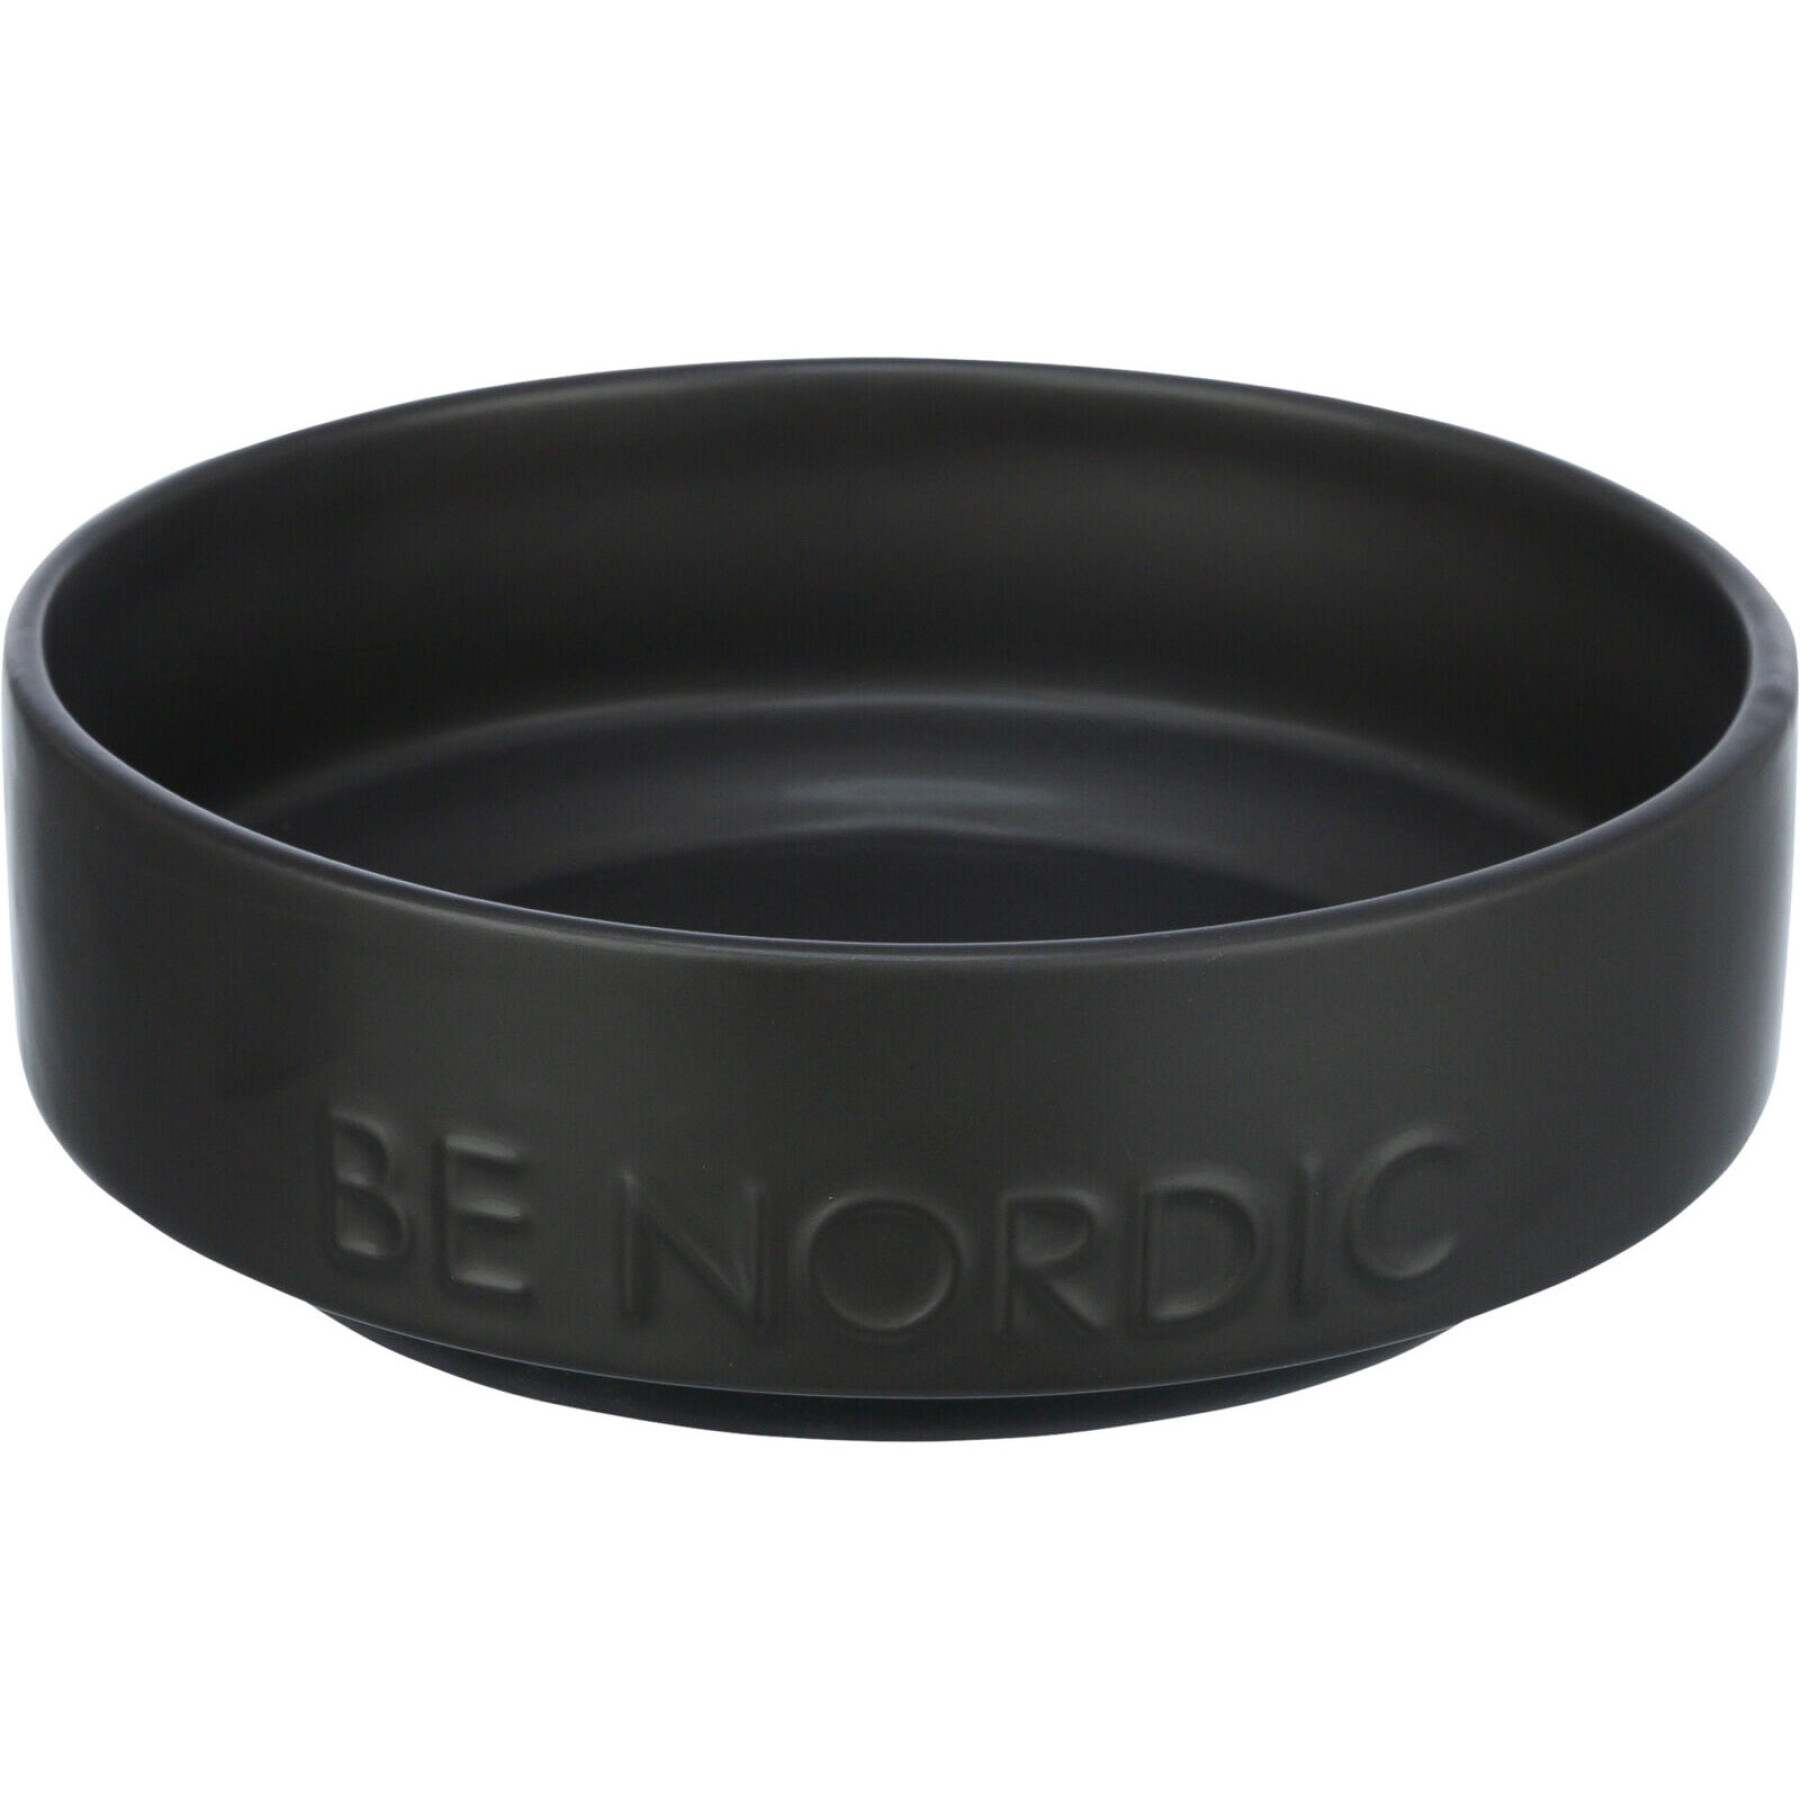 Ceramic/rubber cat bowl Trixie Be Nordic